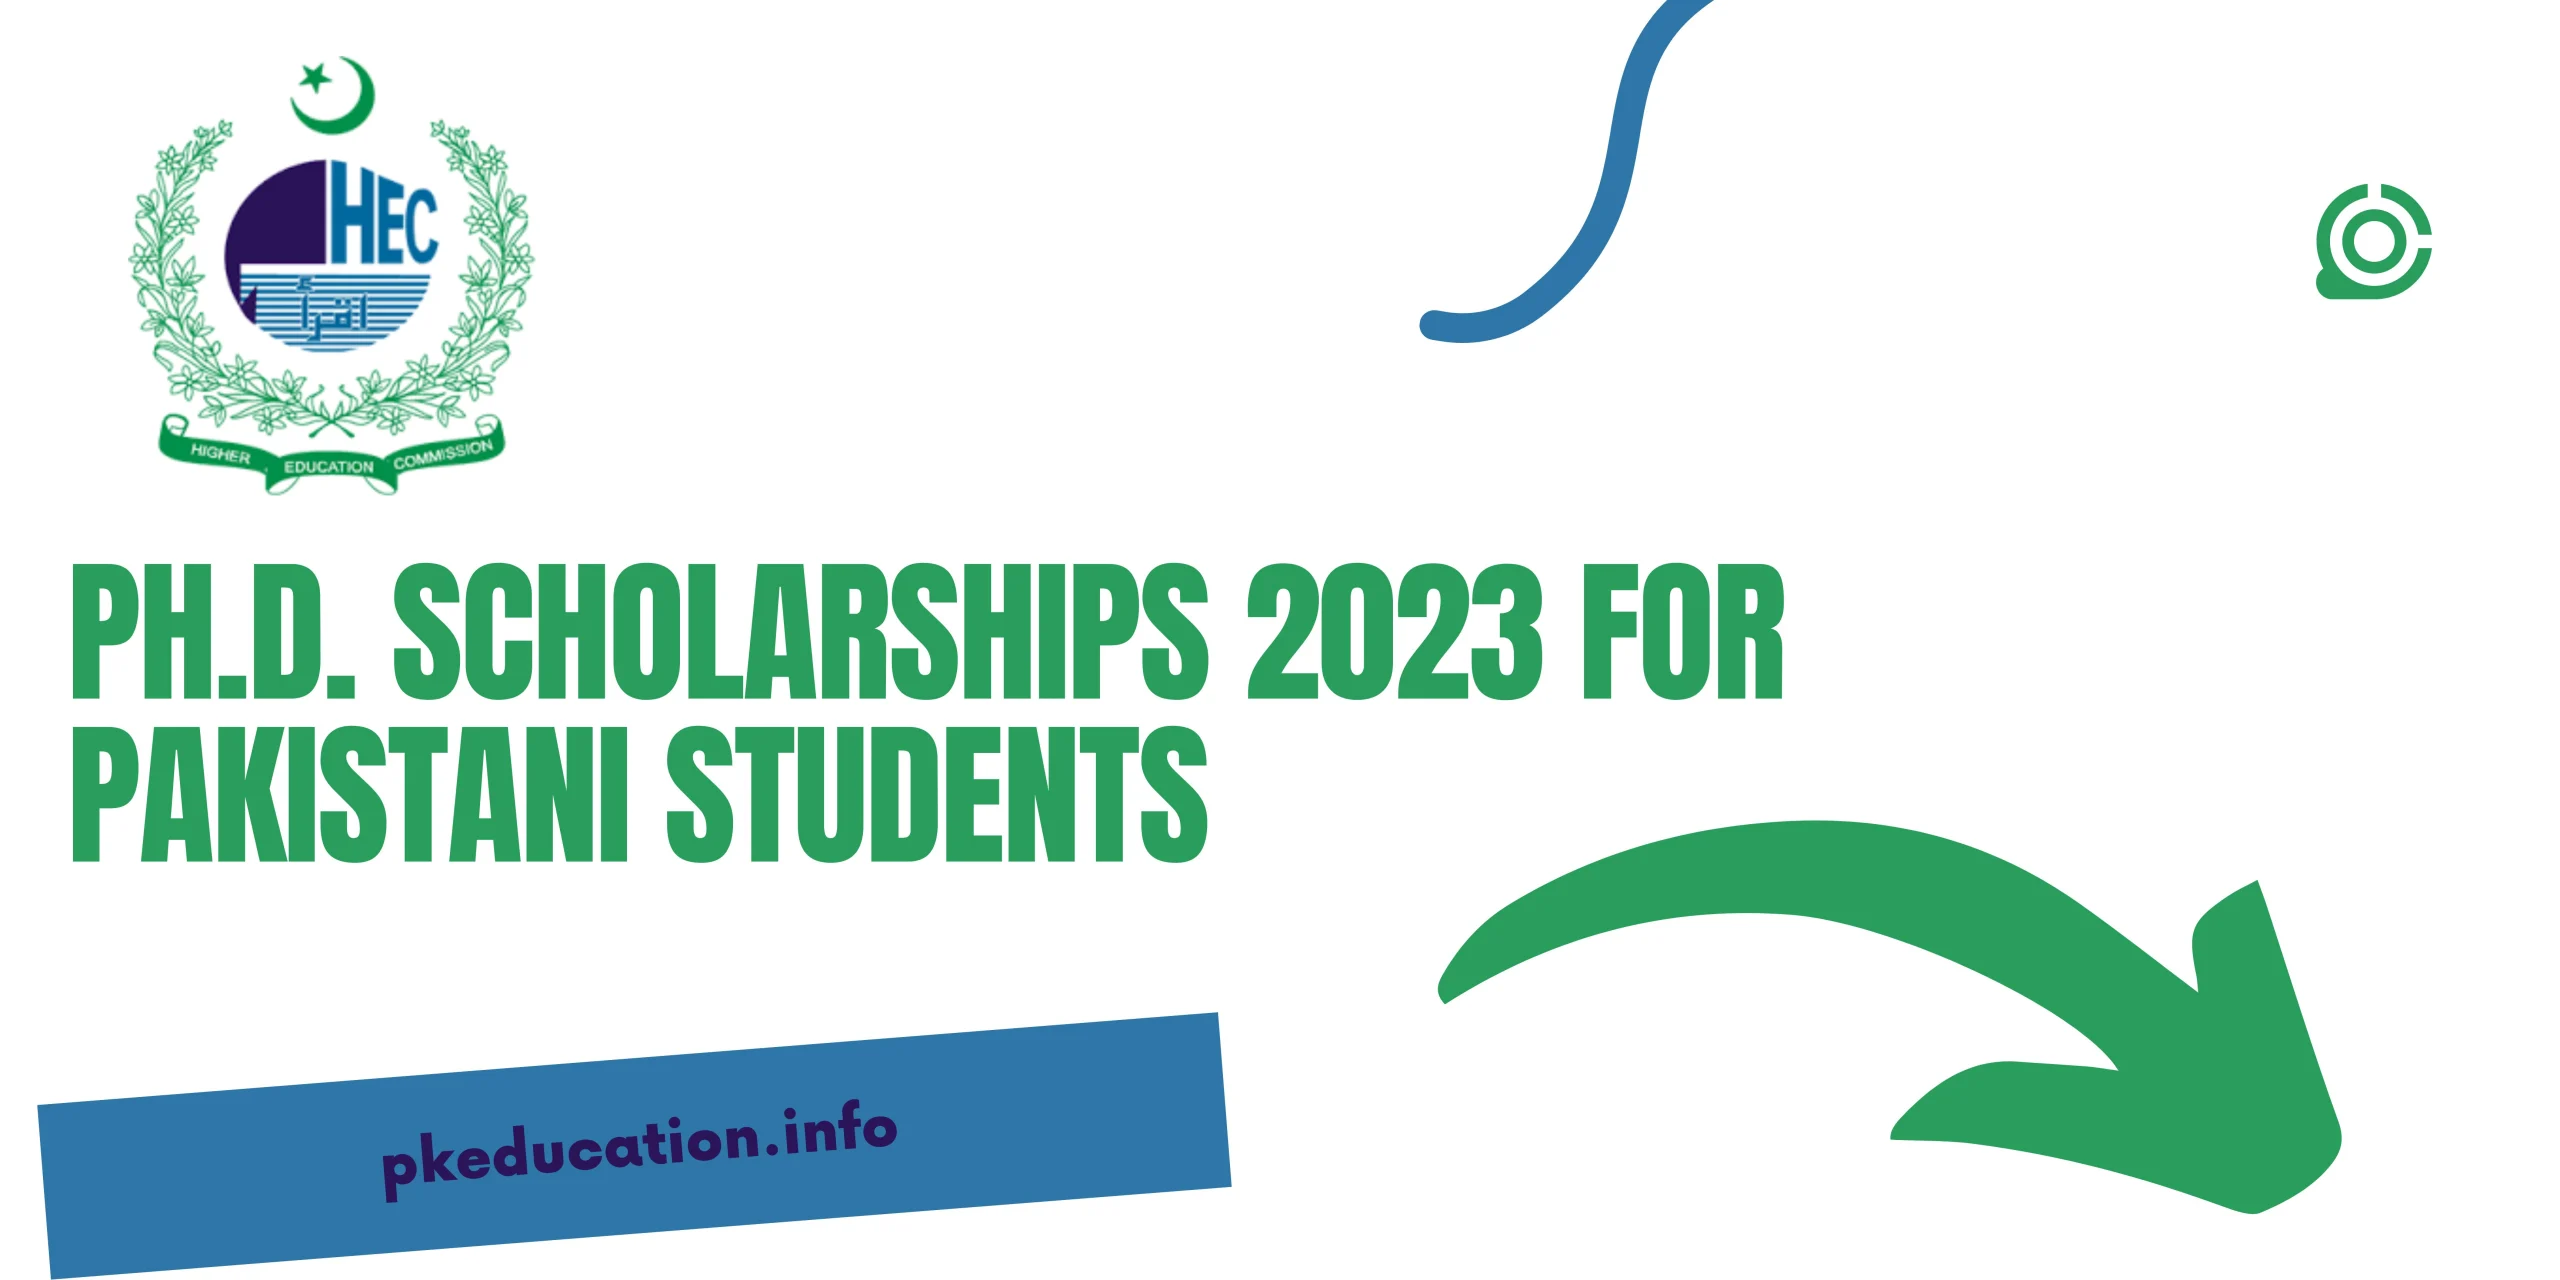 Ph.D. scholarships 2023 for Pakistani students